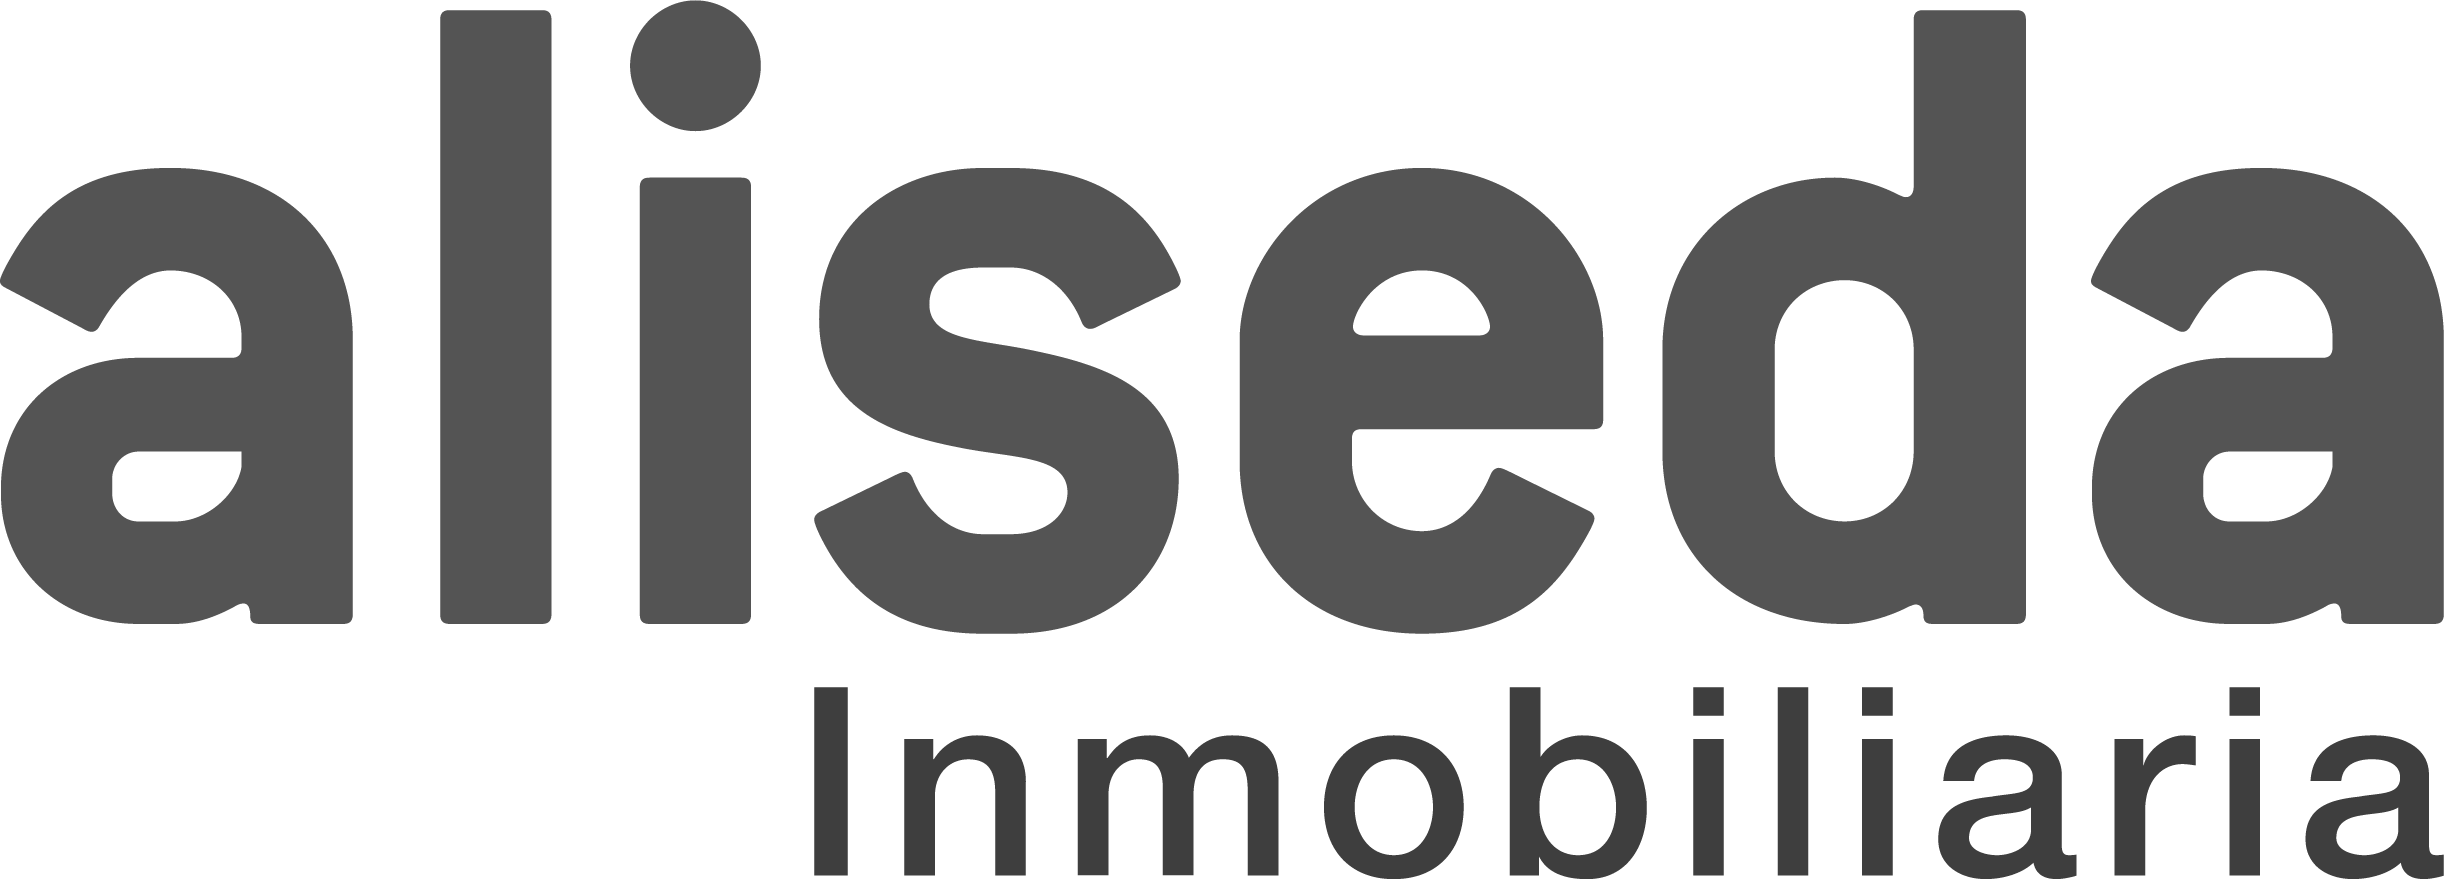 aliseda-logo